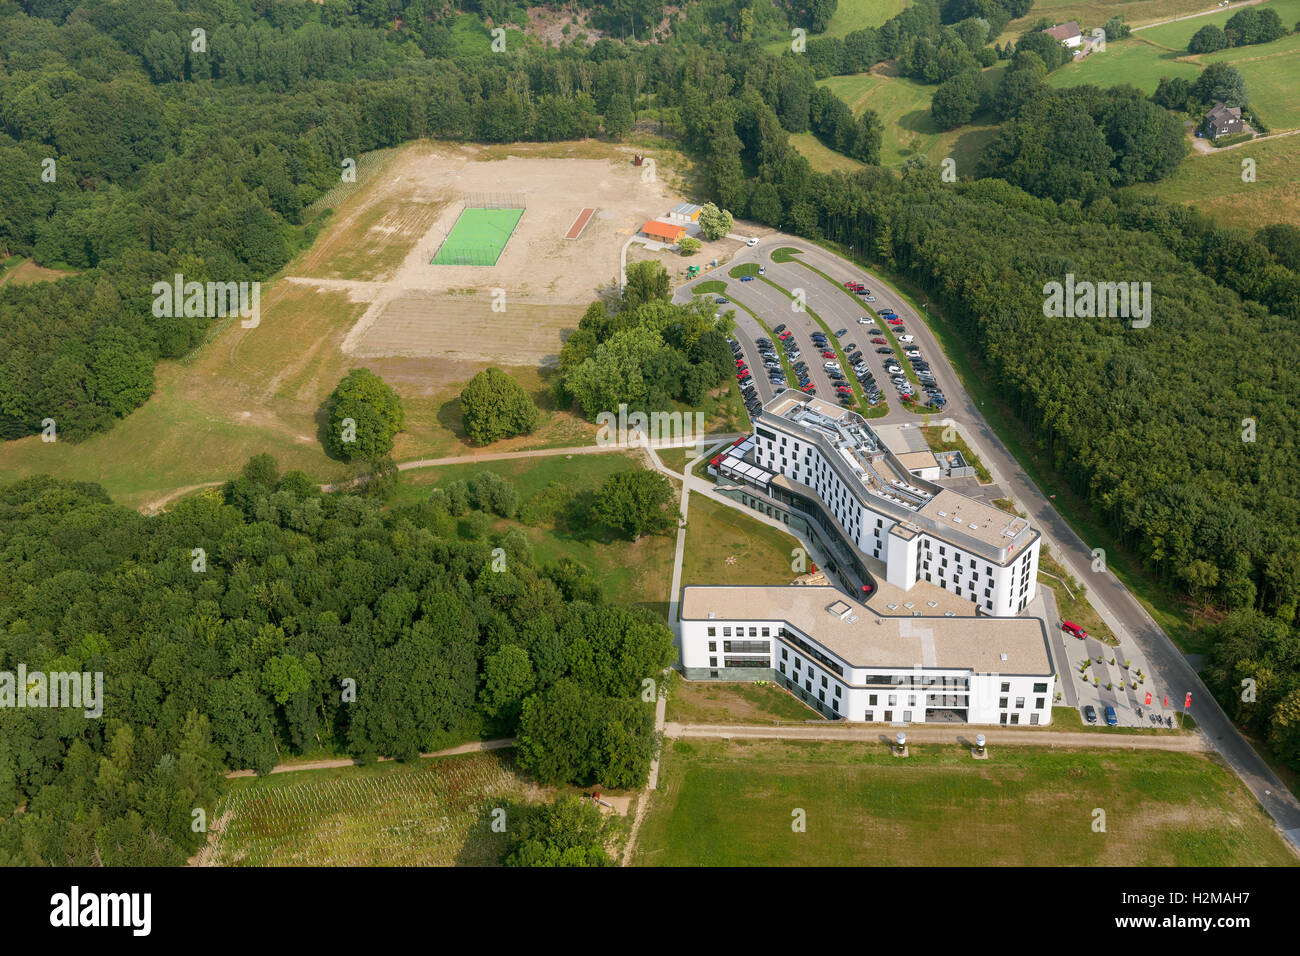 Fotografía aérea, centro educativo, IG Metal Obersprockhövel, imagen aérea de Sprockhövel, Sprockhövel Ruhr area Foto de stock